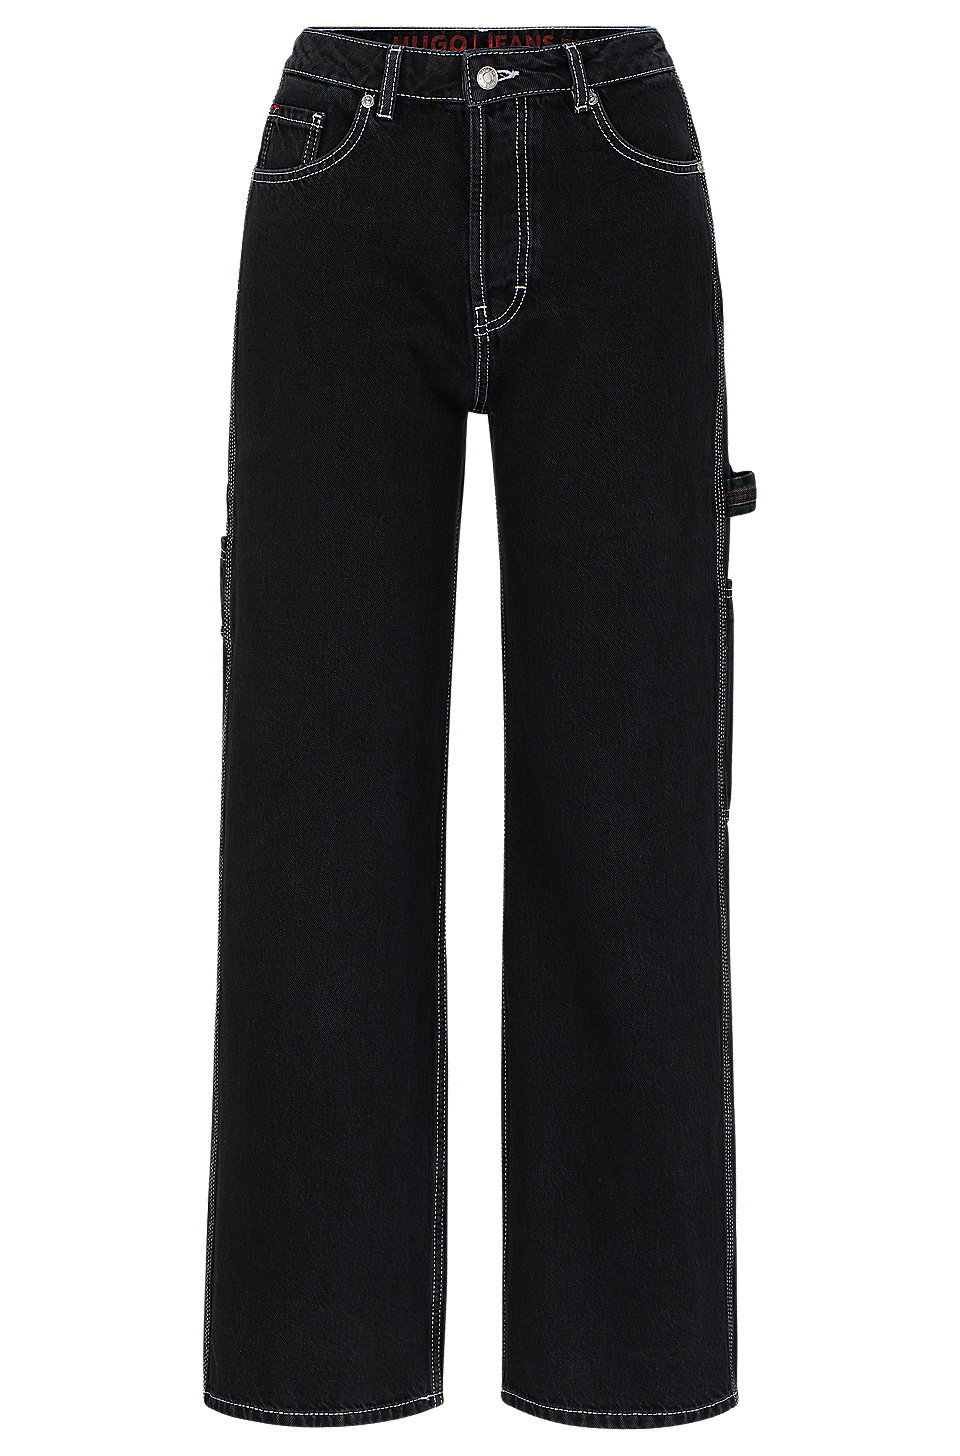 HUGO - Relaxed-fit jeans in black rigid denim